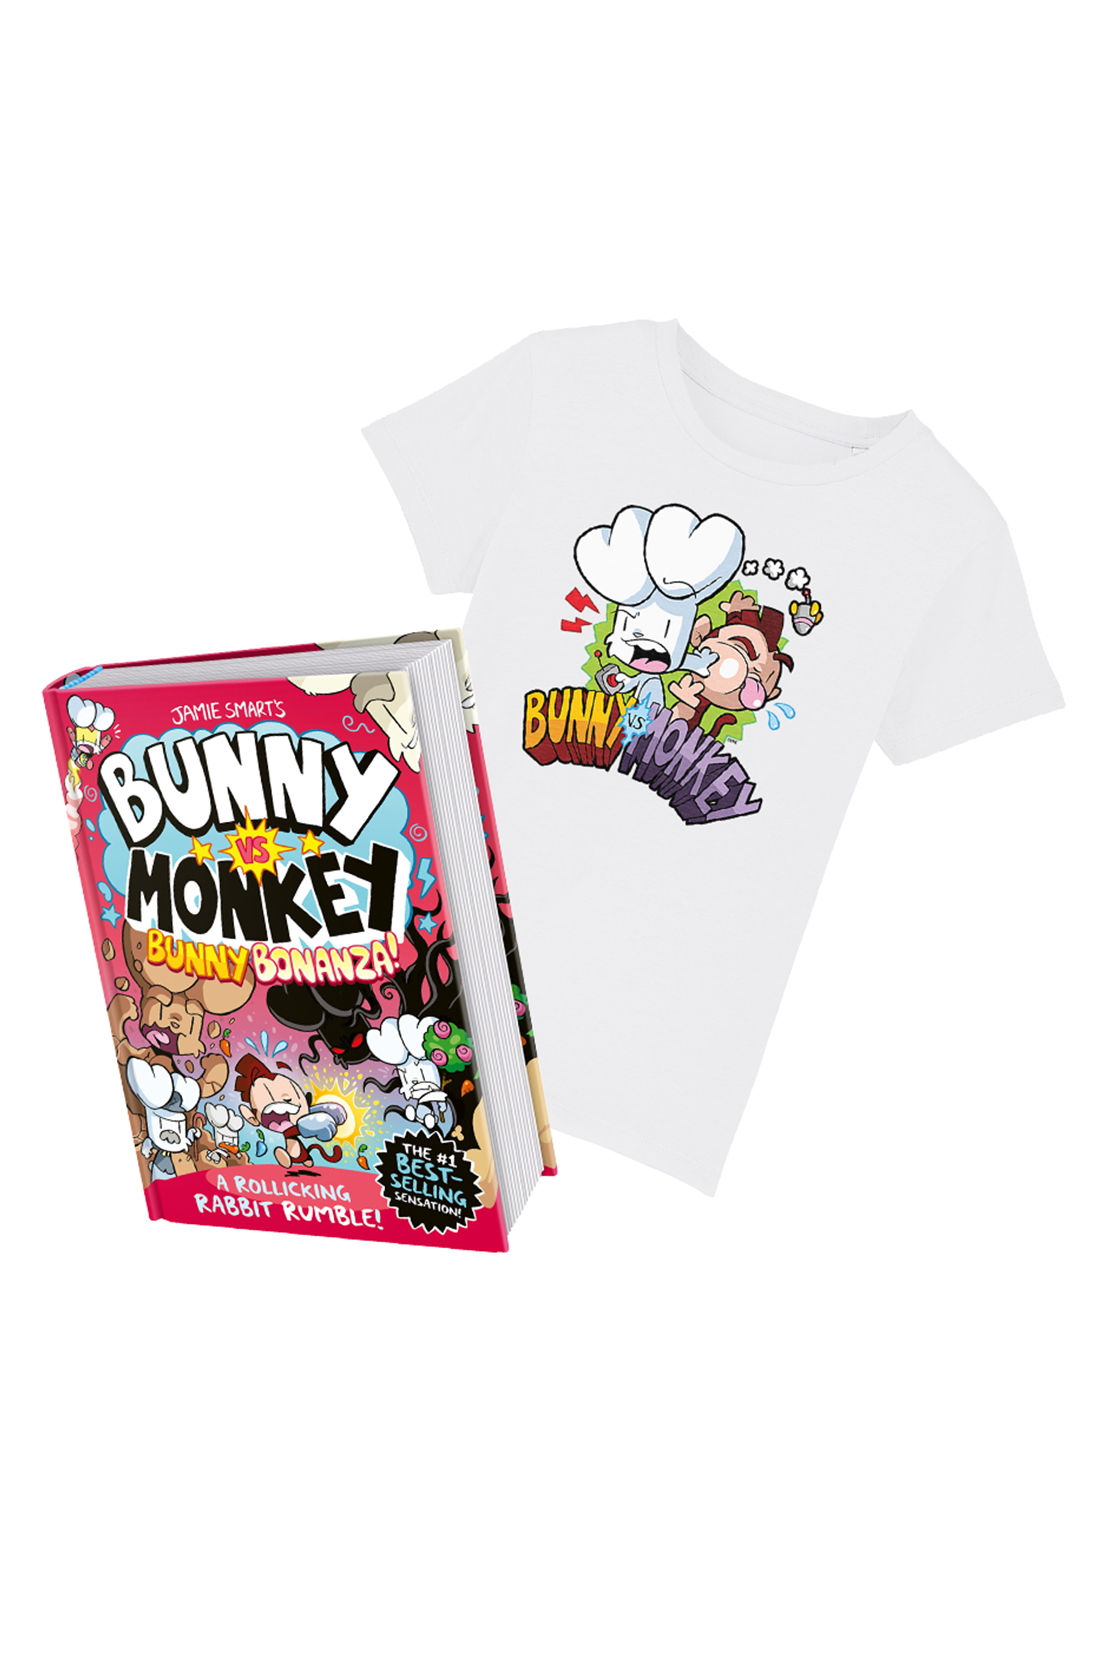 Bunny vs Monkey 9: Book & T-Shirt Combo